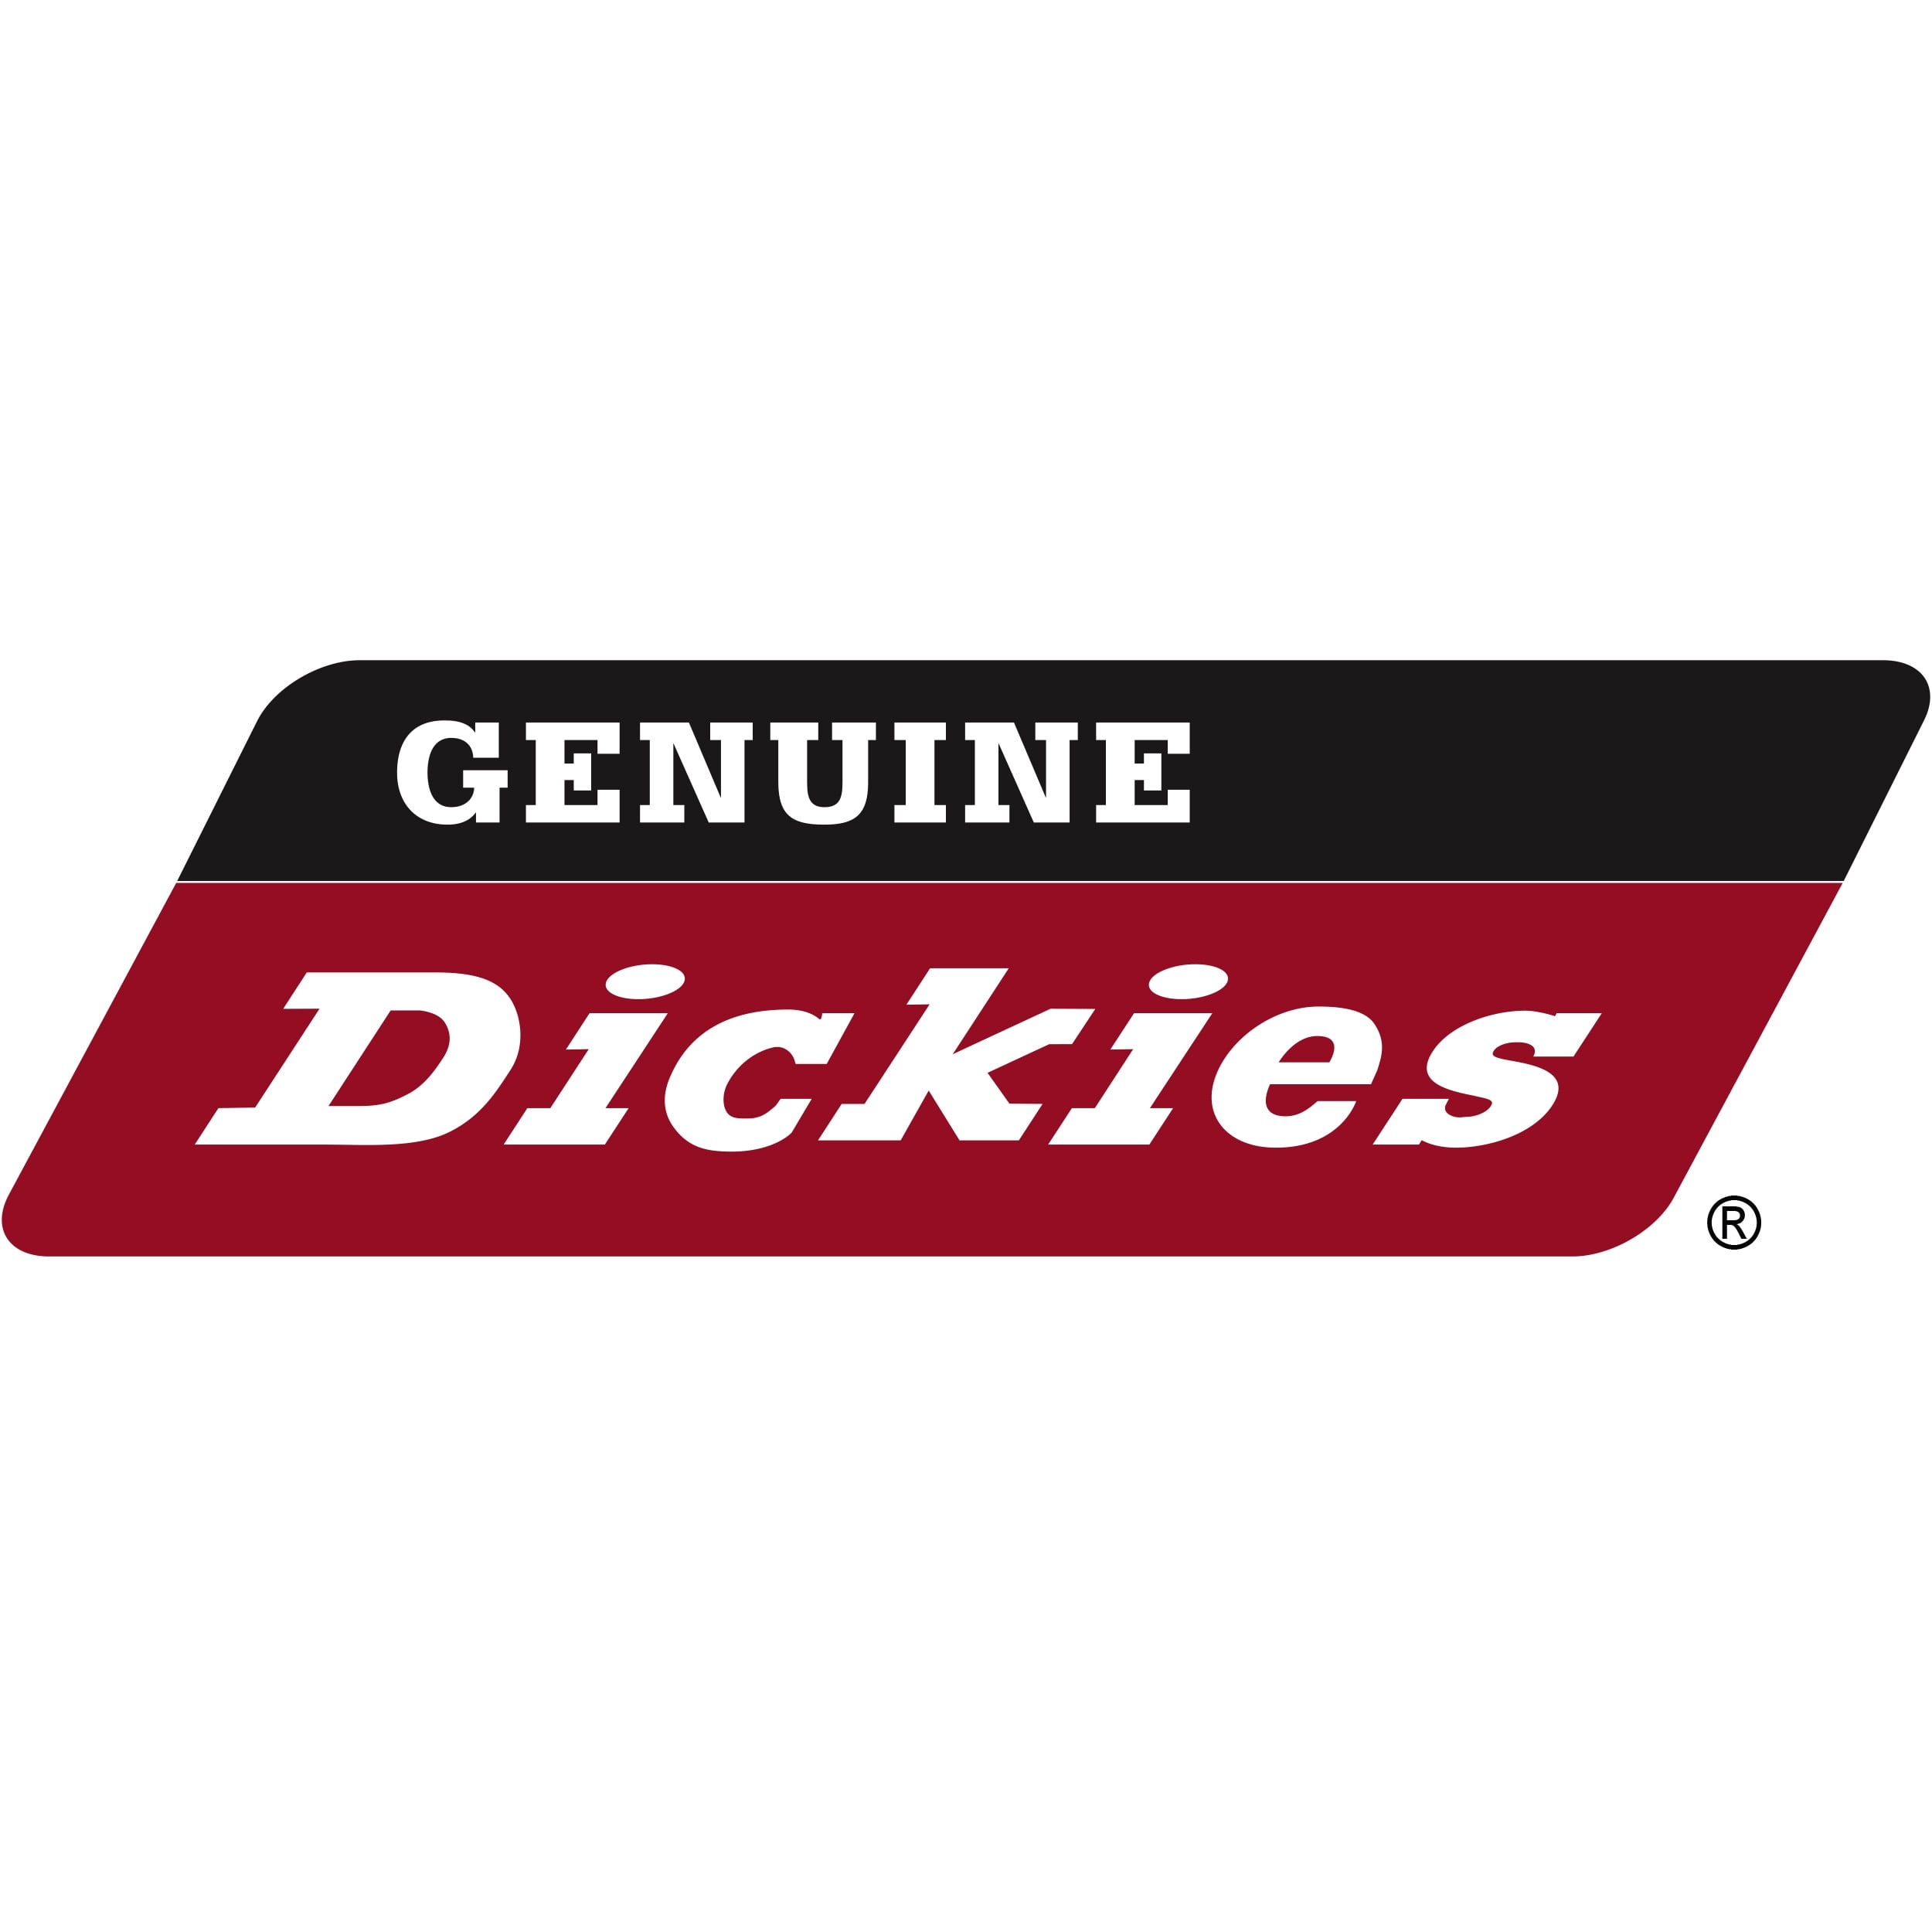 Genuine Dickies Auto Sun Shade for Trucks, - Walmart.com